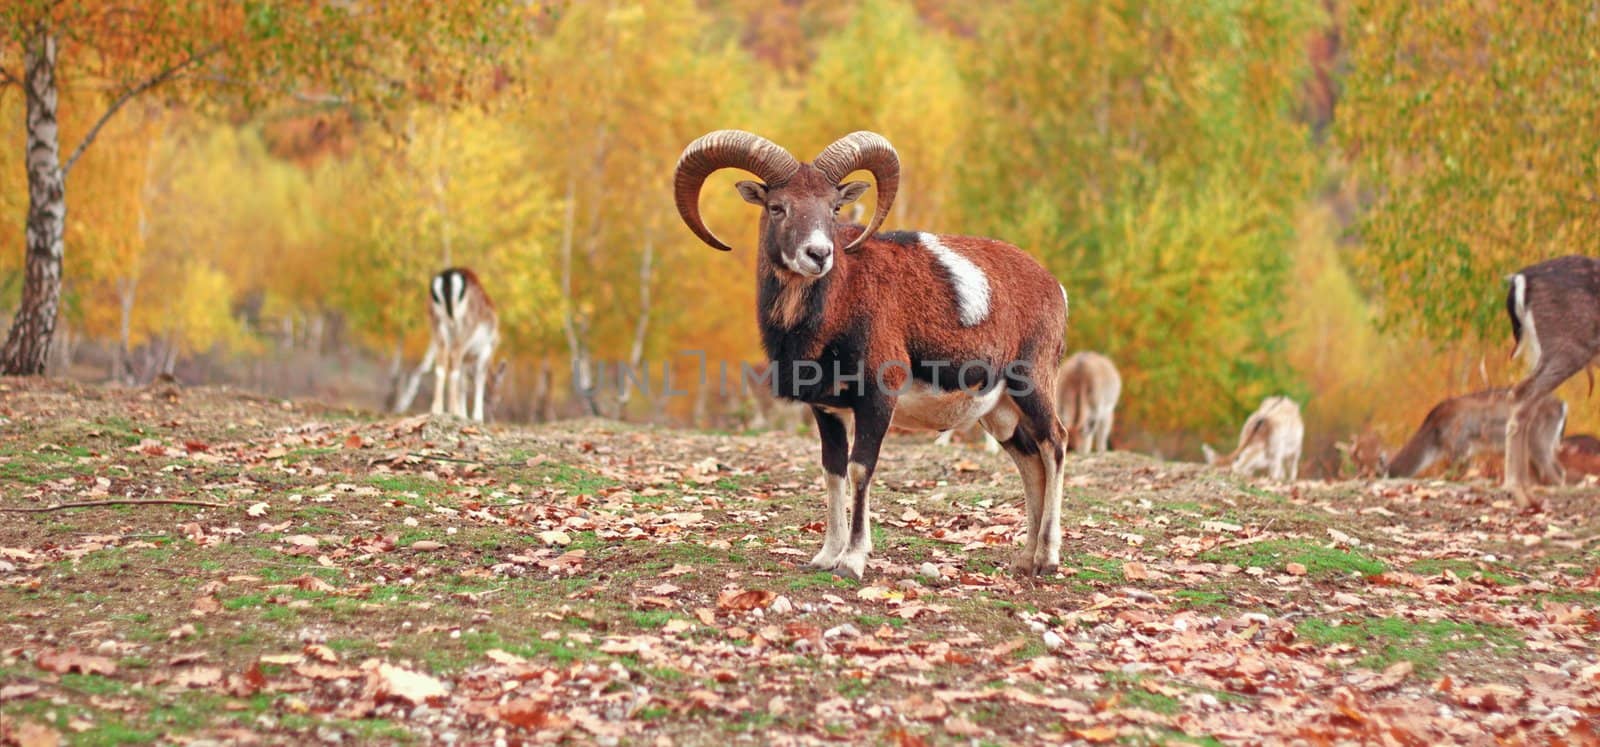 mouflon ram in autumn setting by taviphoto